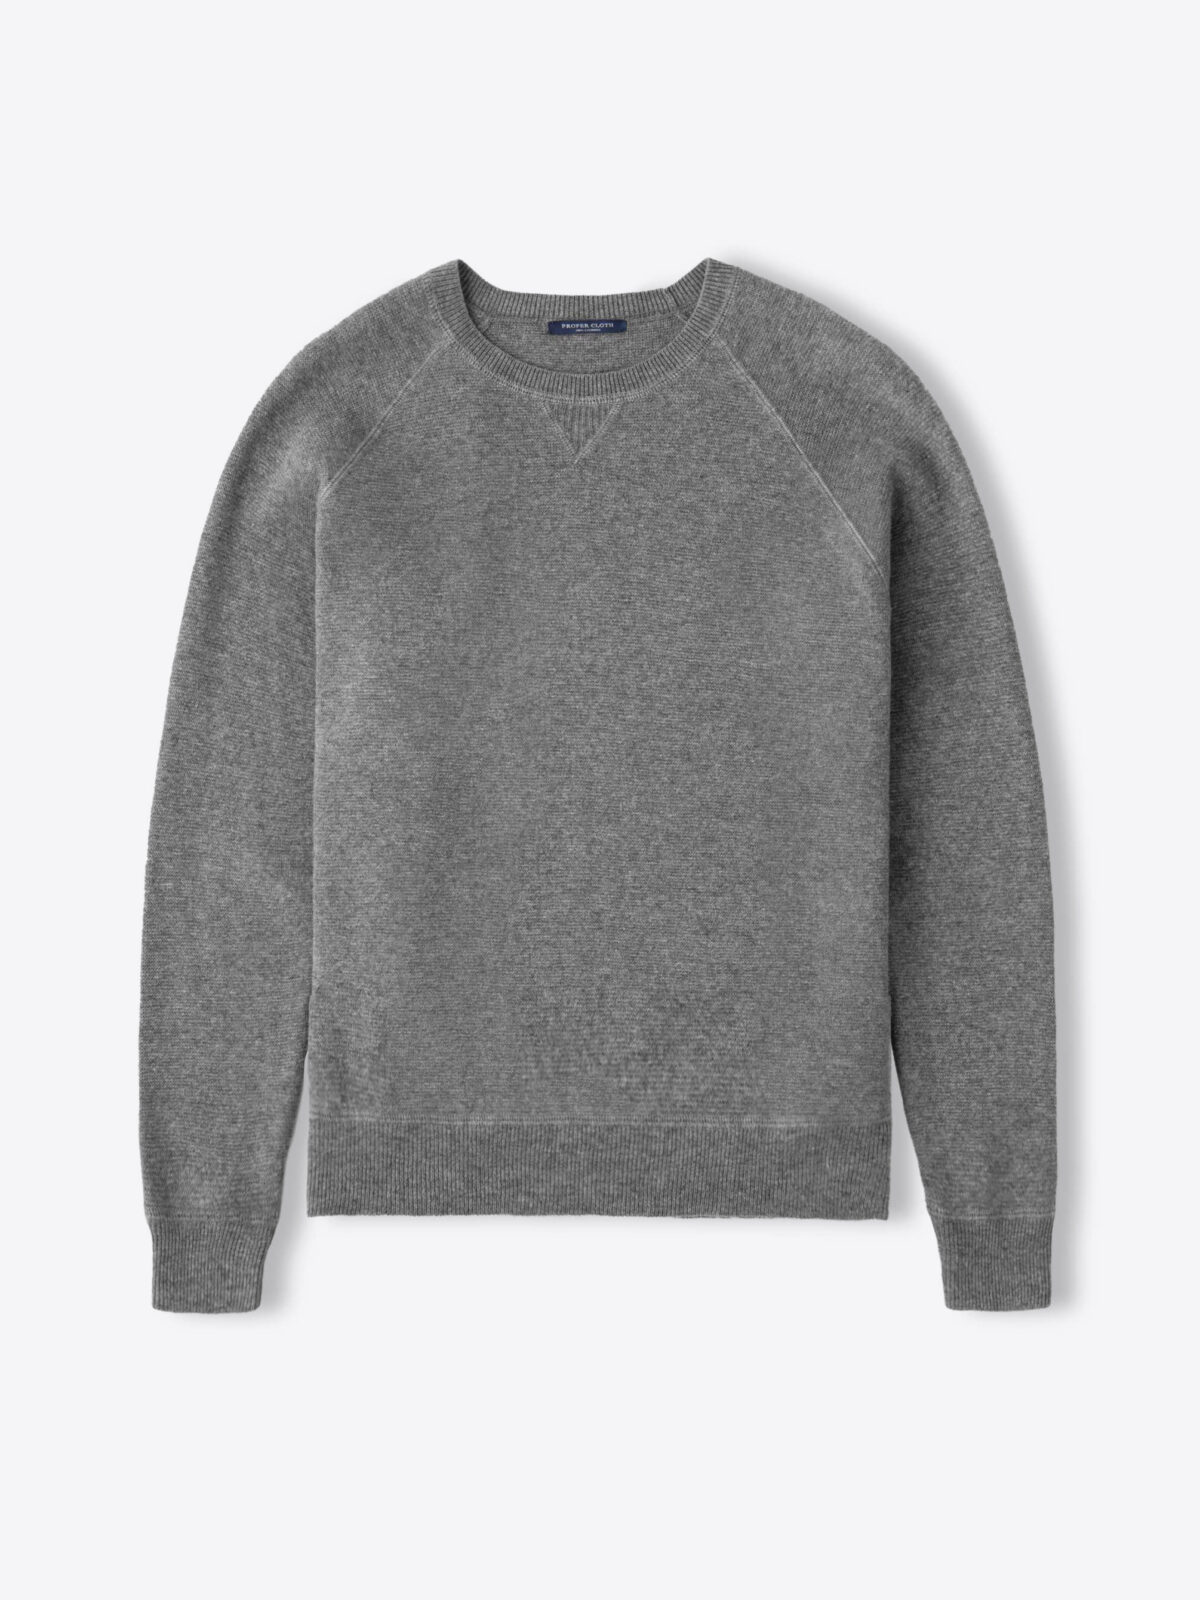 Grey Wool and Cotton Raglan Crewneck Sweater